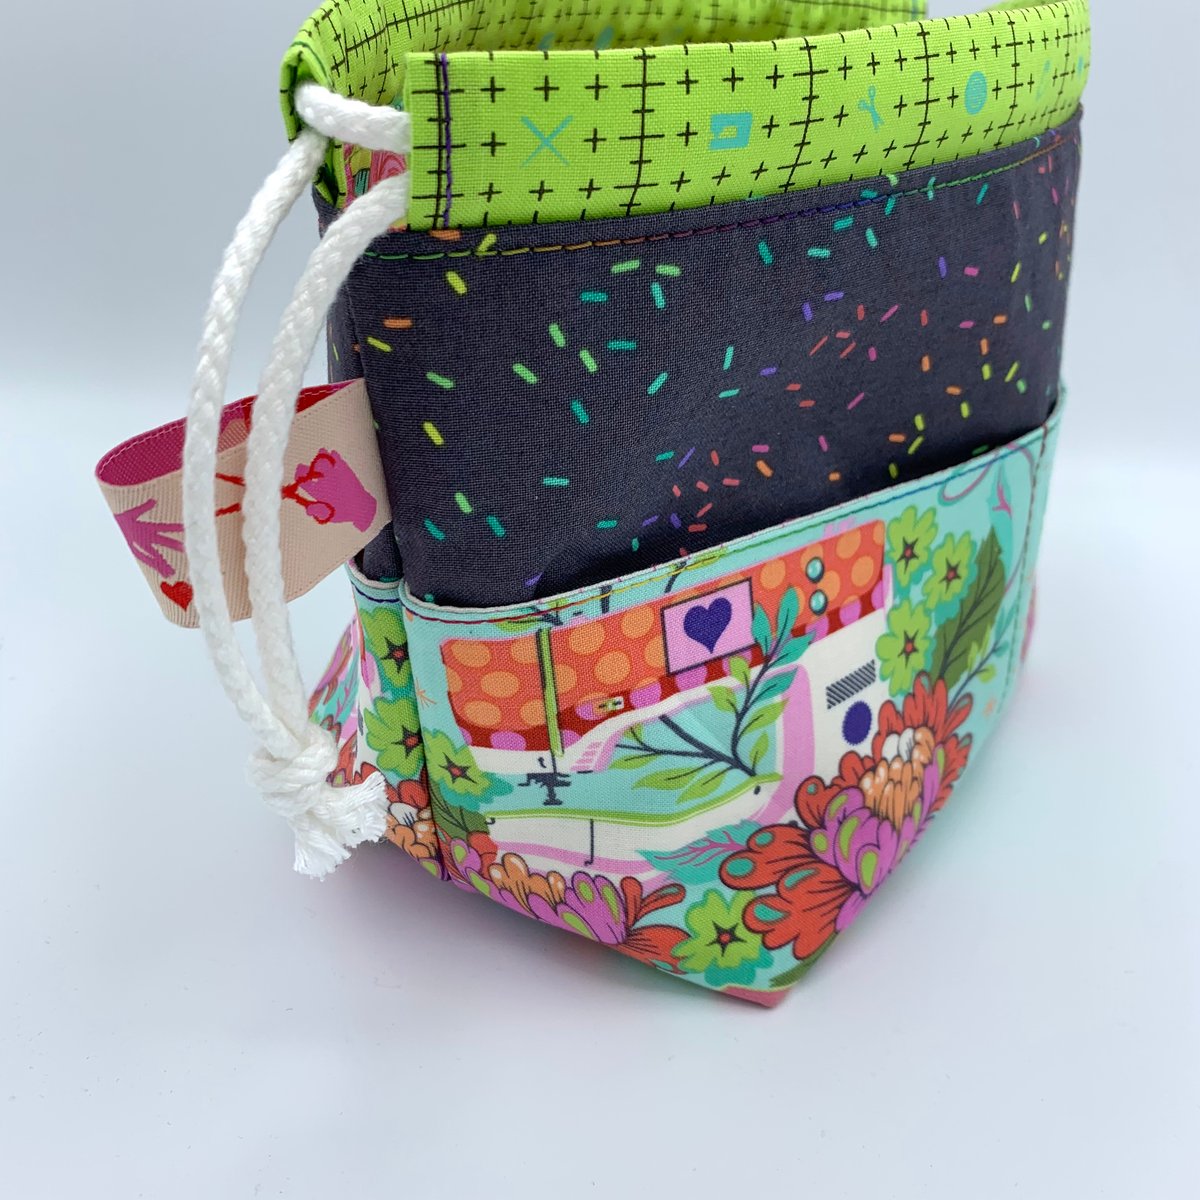 TulaP Drawstring Bag - Large w/Exterior Pockets